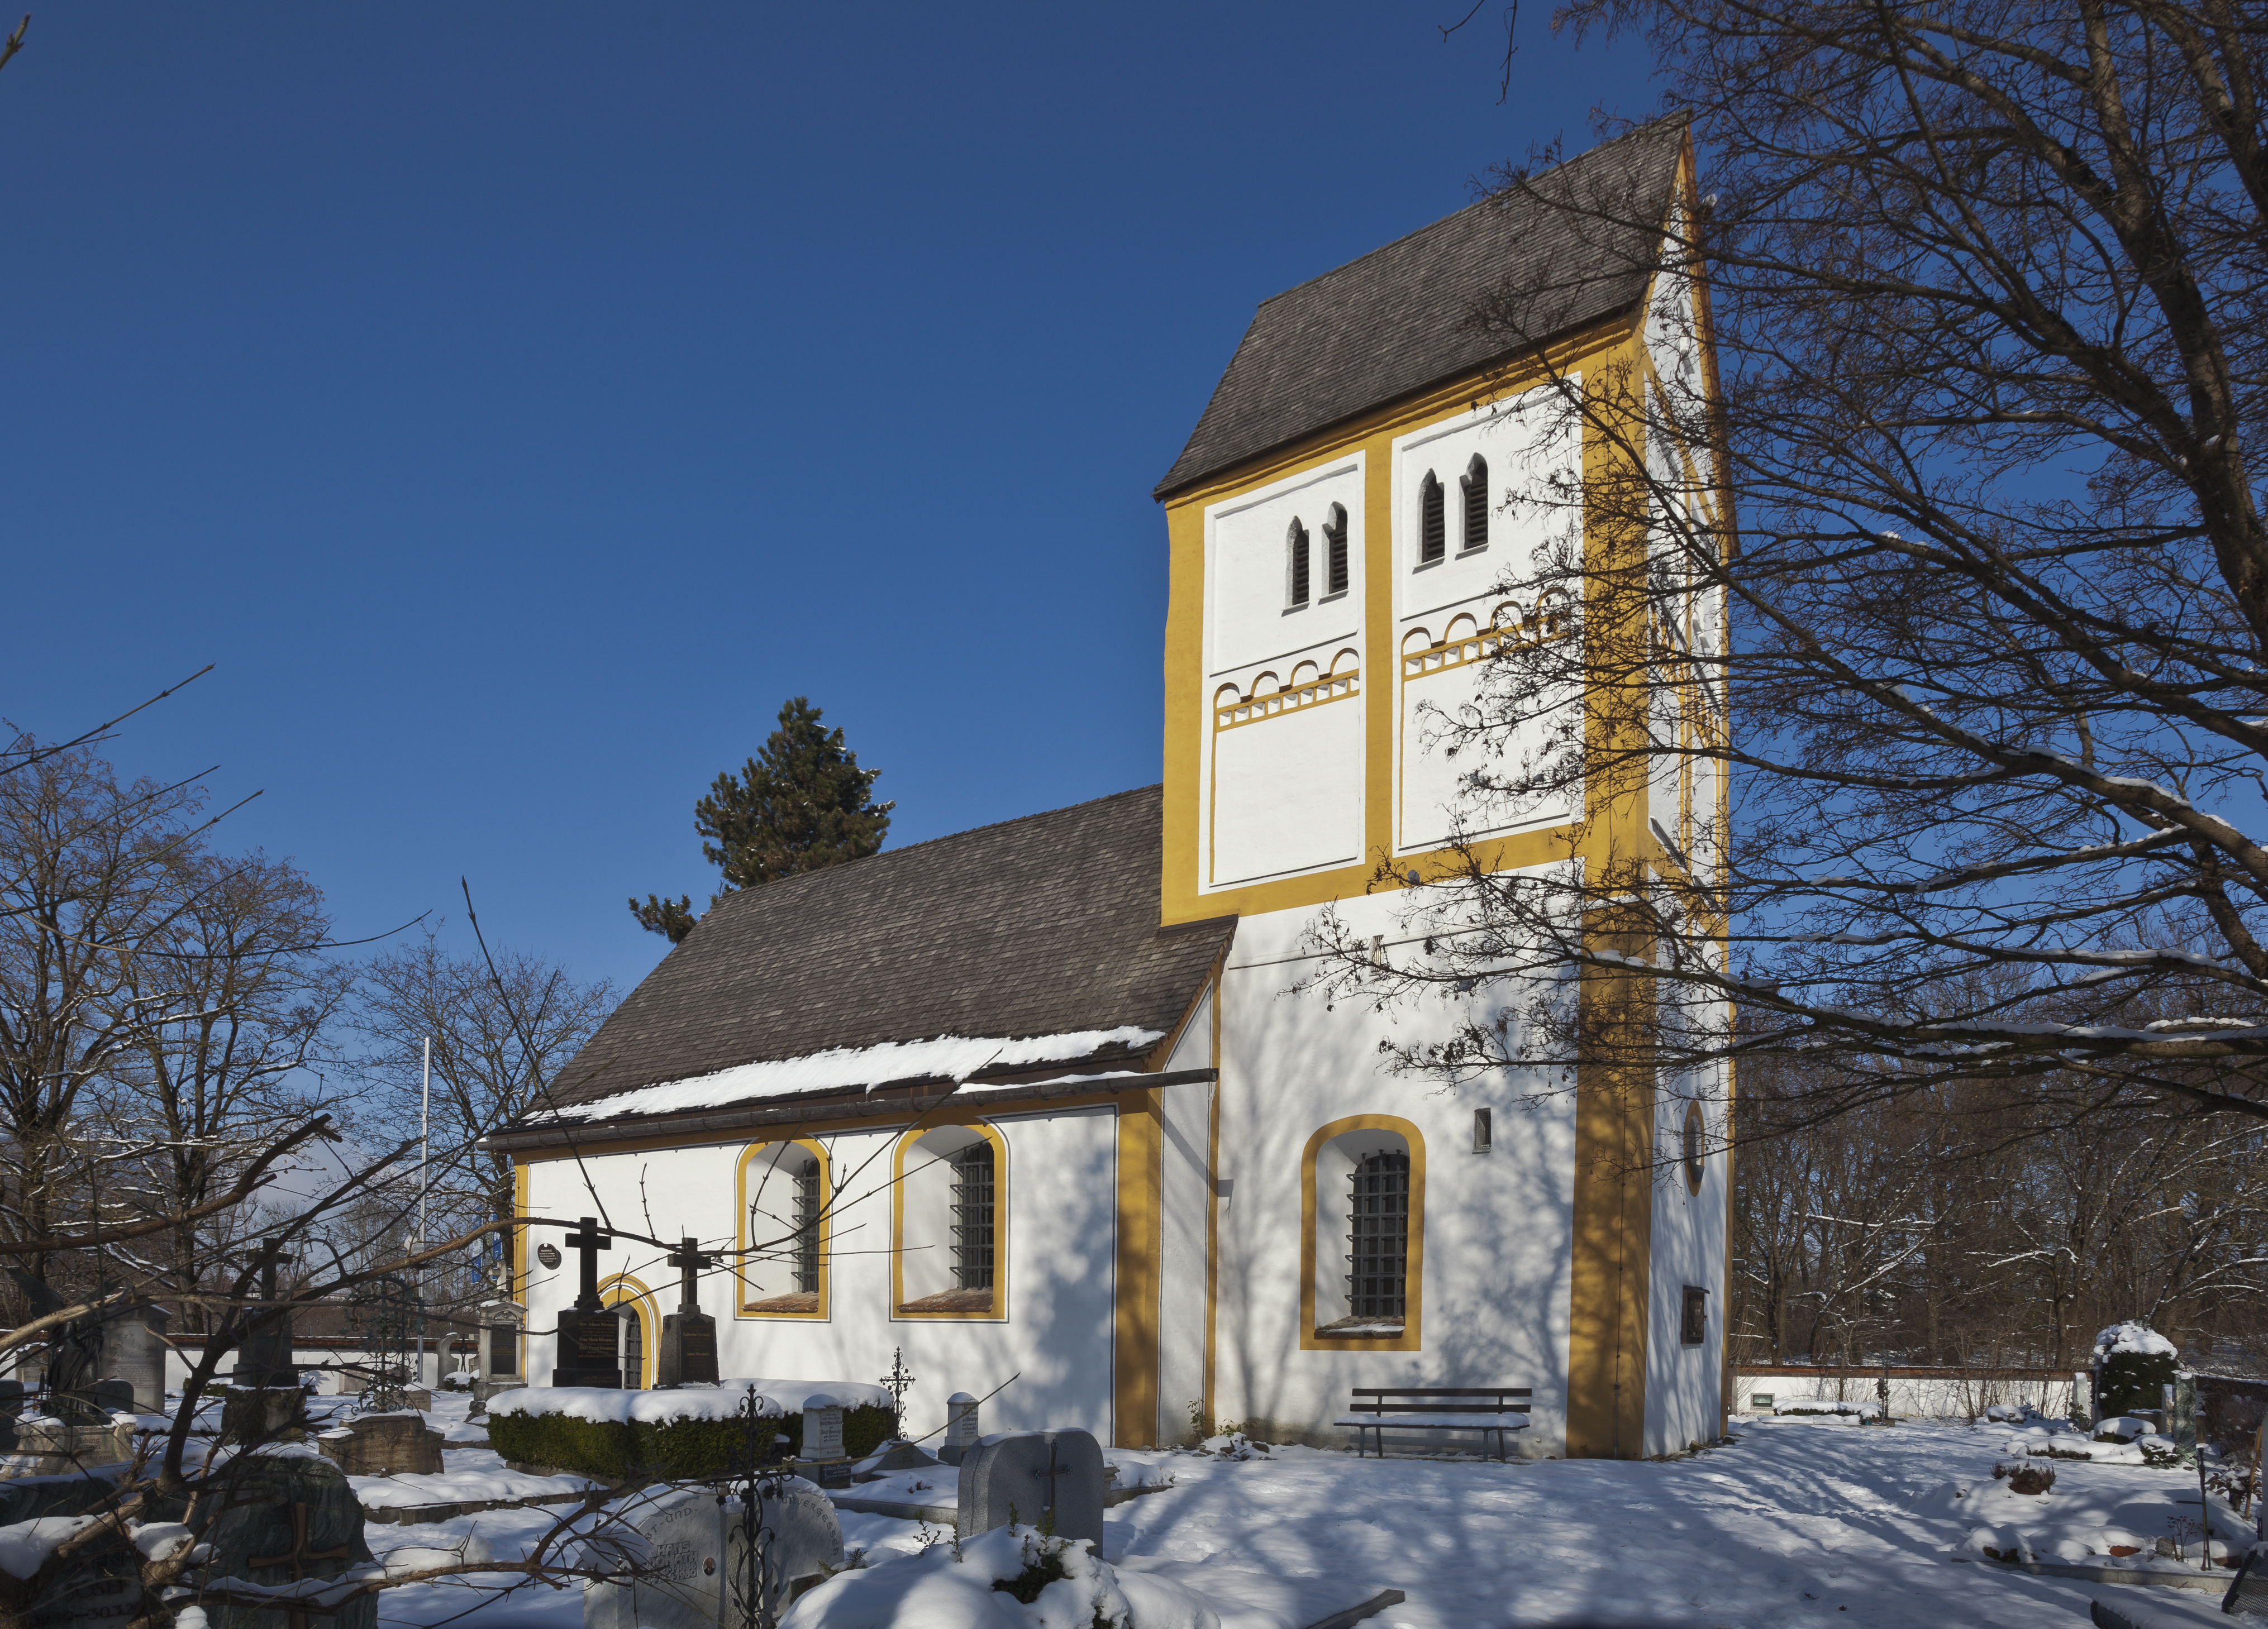 Iglesia de la Santa Cruz, Múnich, Alemania, 2013-02-11, DD 06